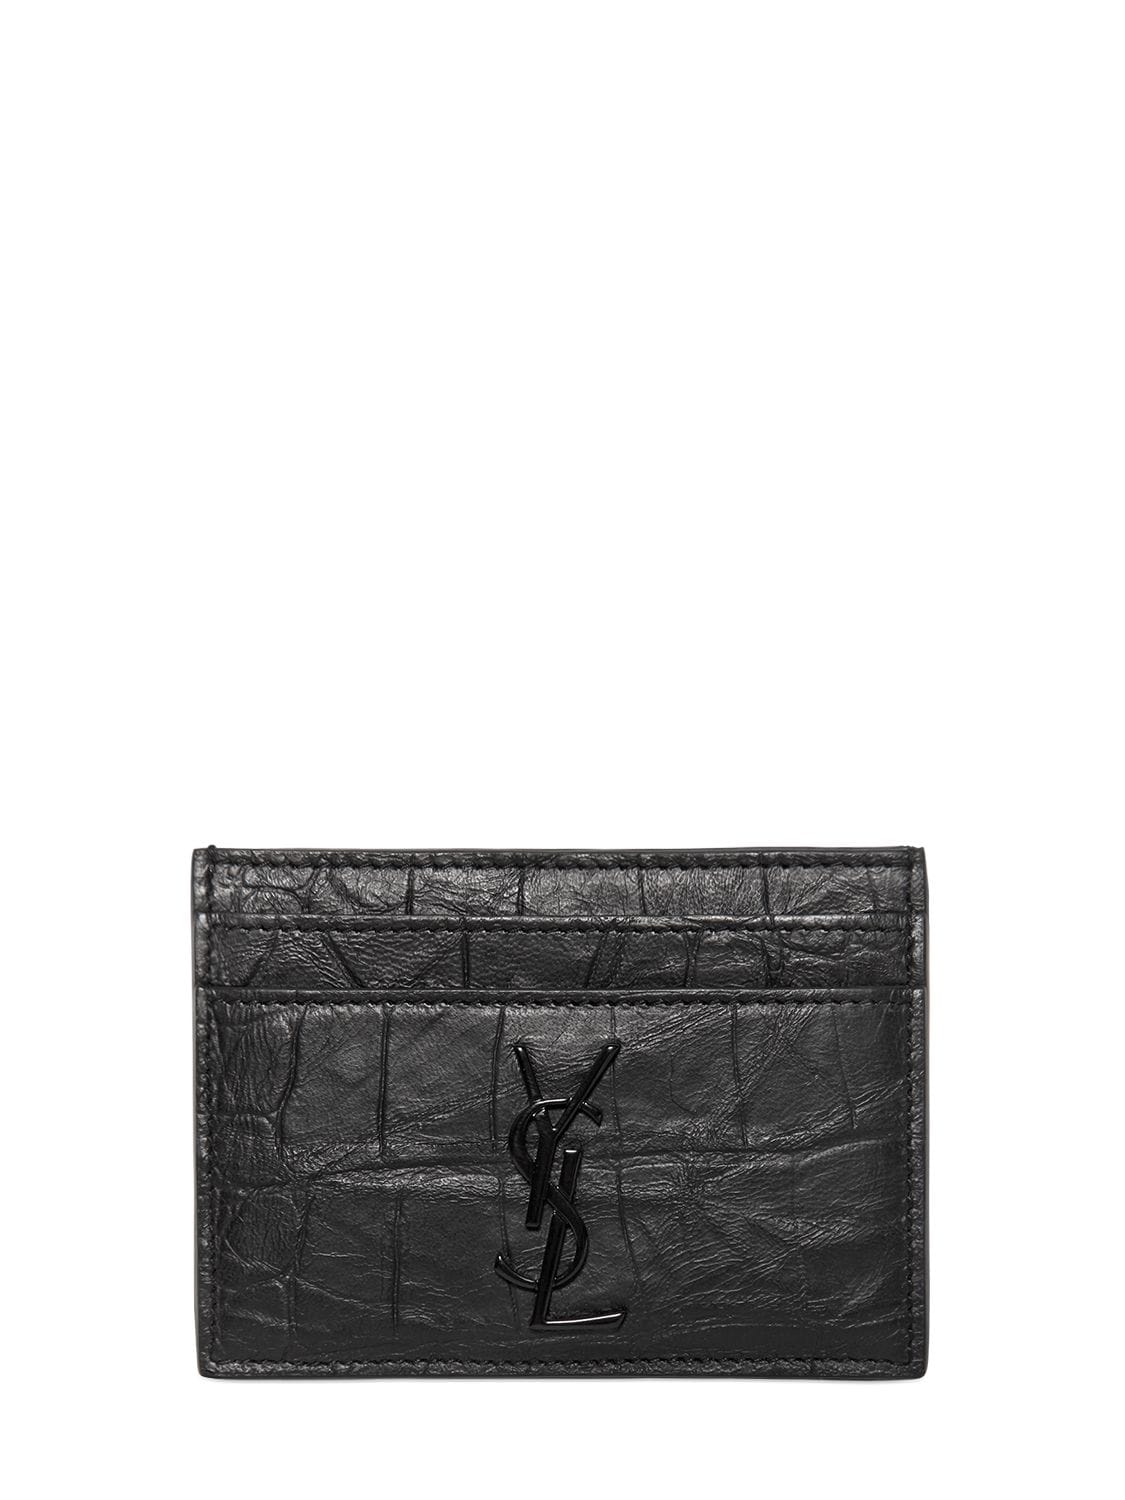 Saint Laurent Croc Embossed Leather Card Holder In Black